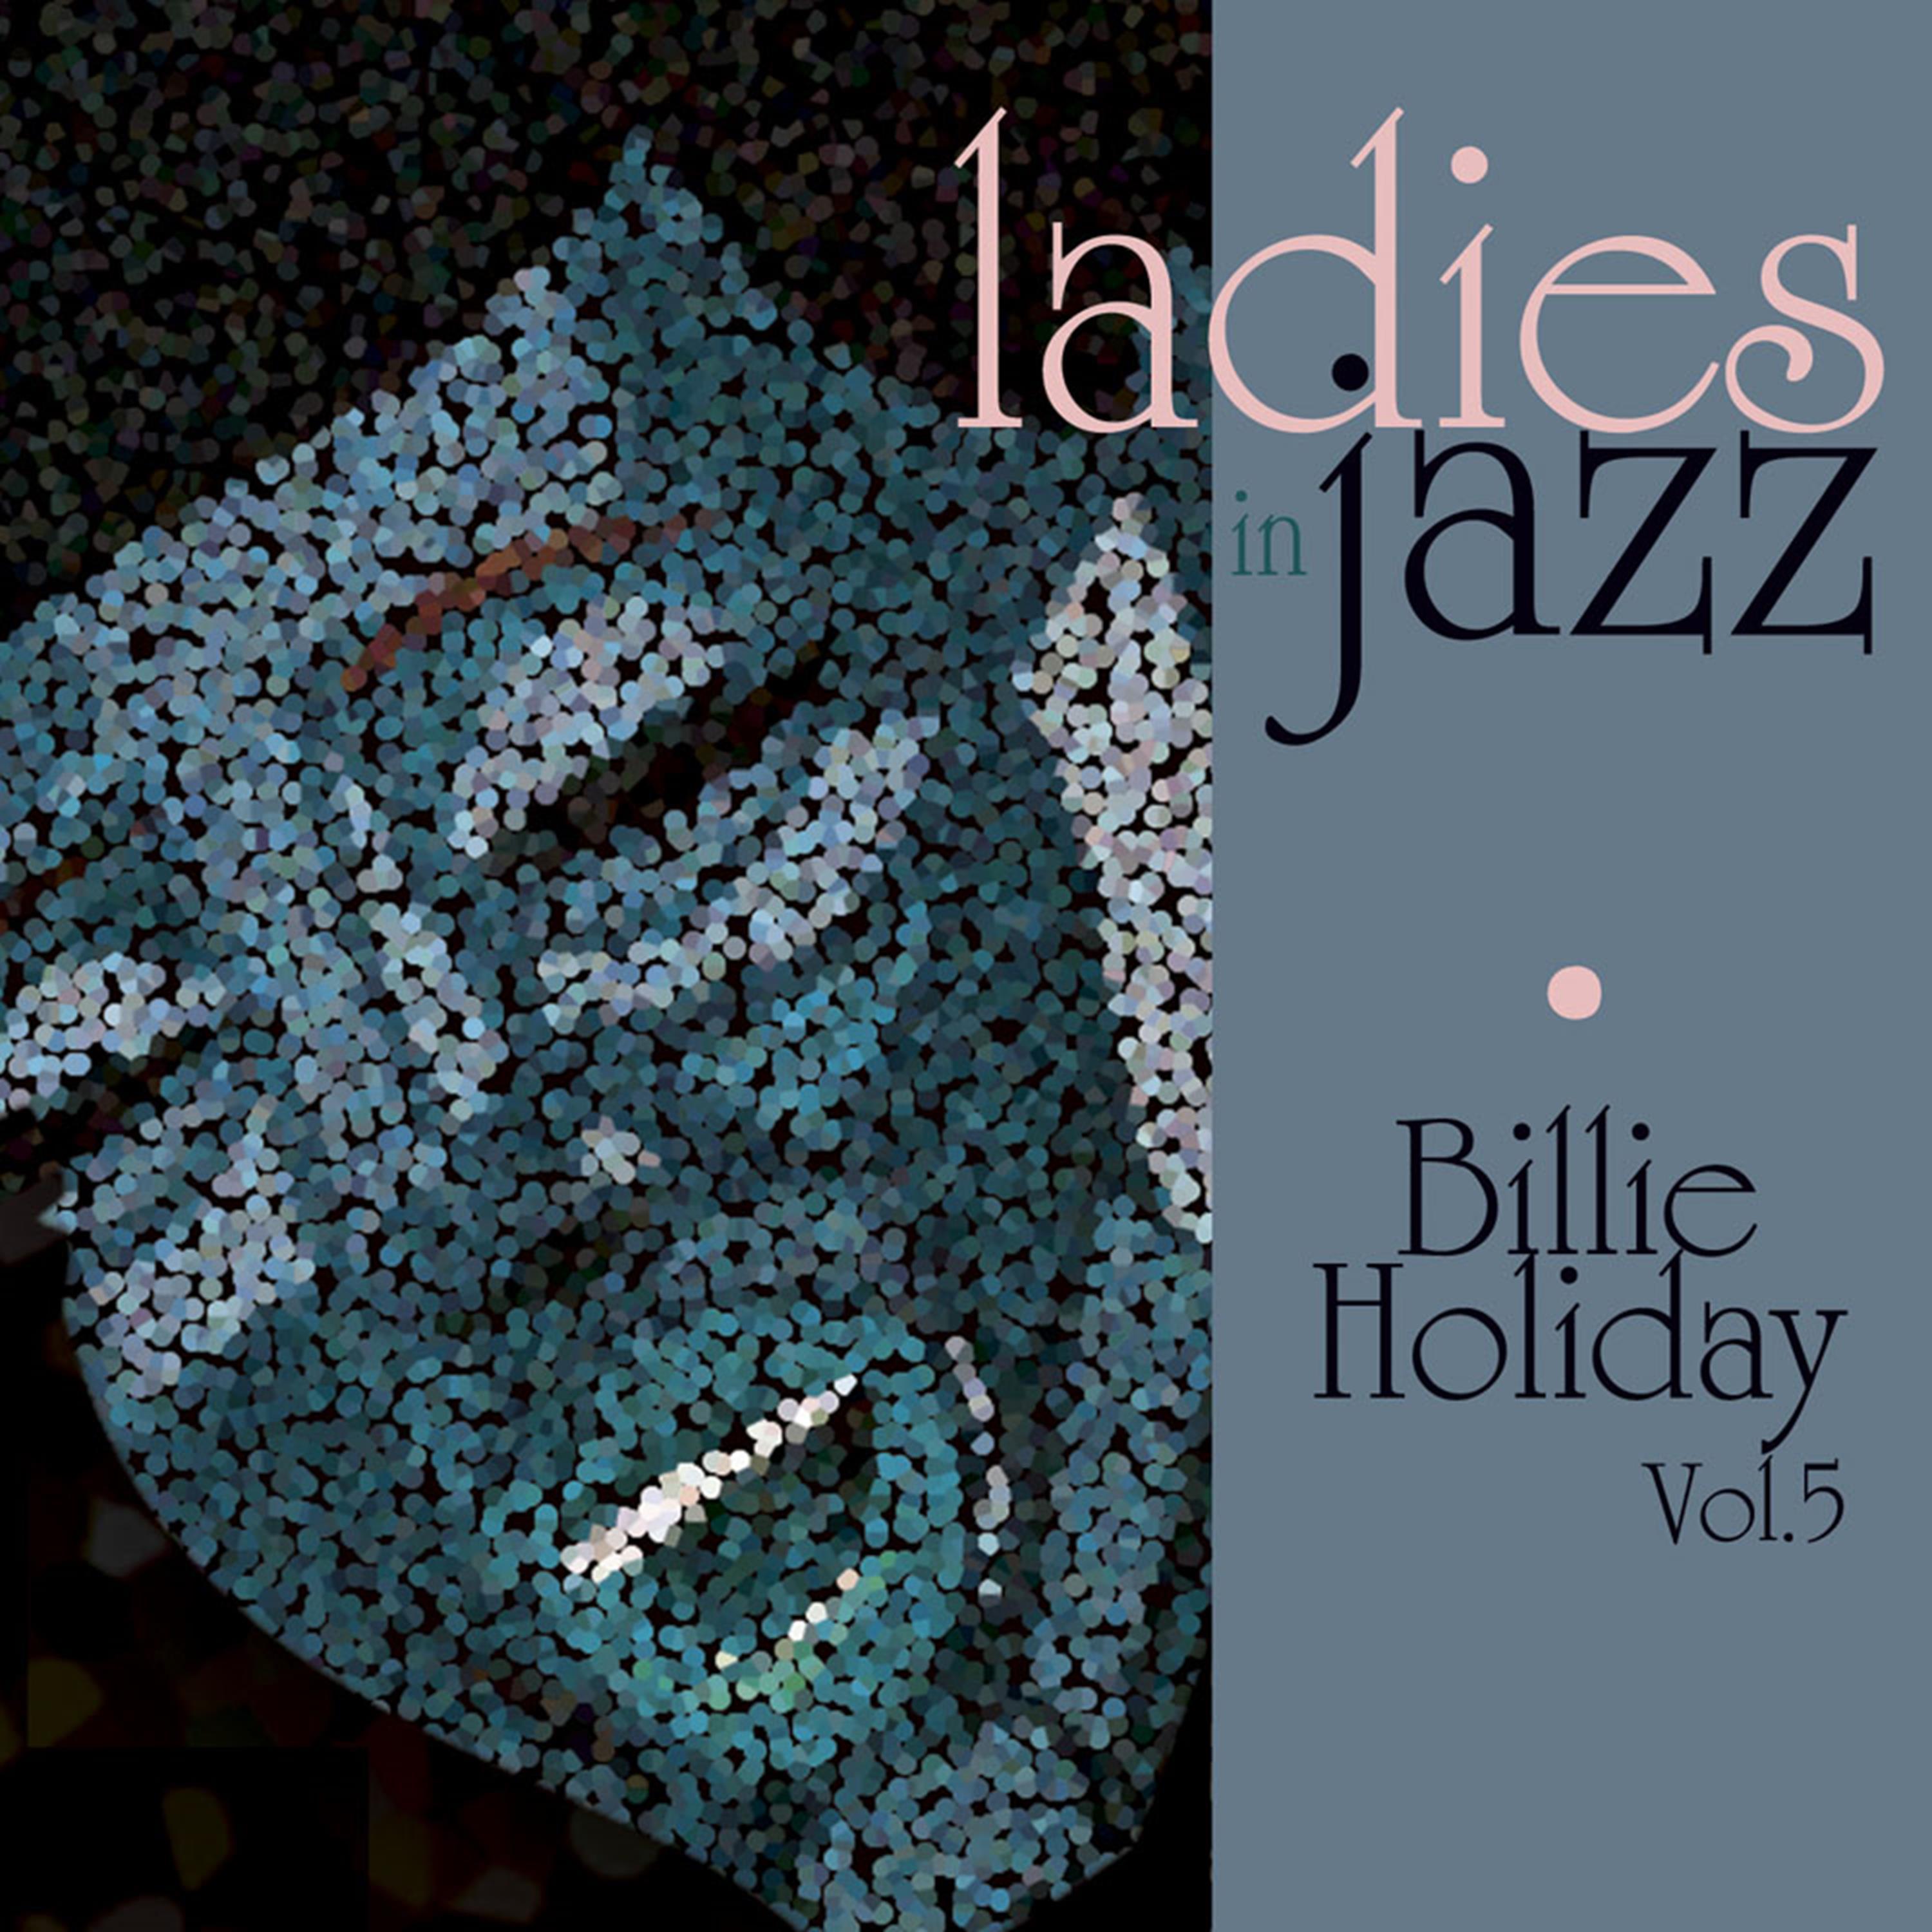 Ladies in Jazz - Billie Holiday, Vol. 5